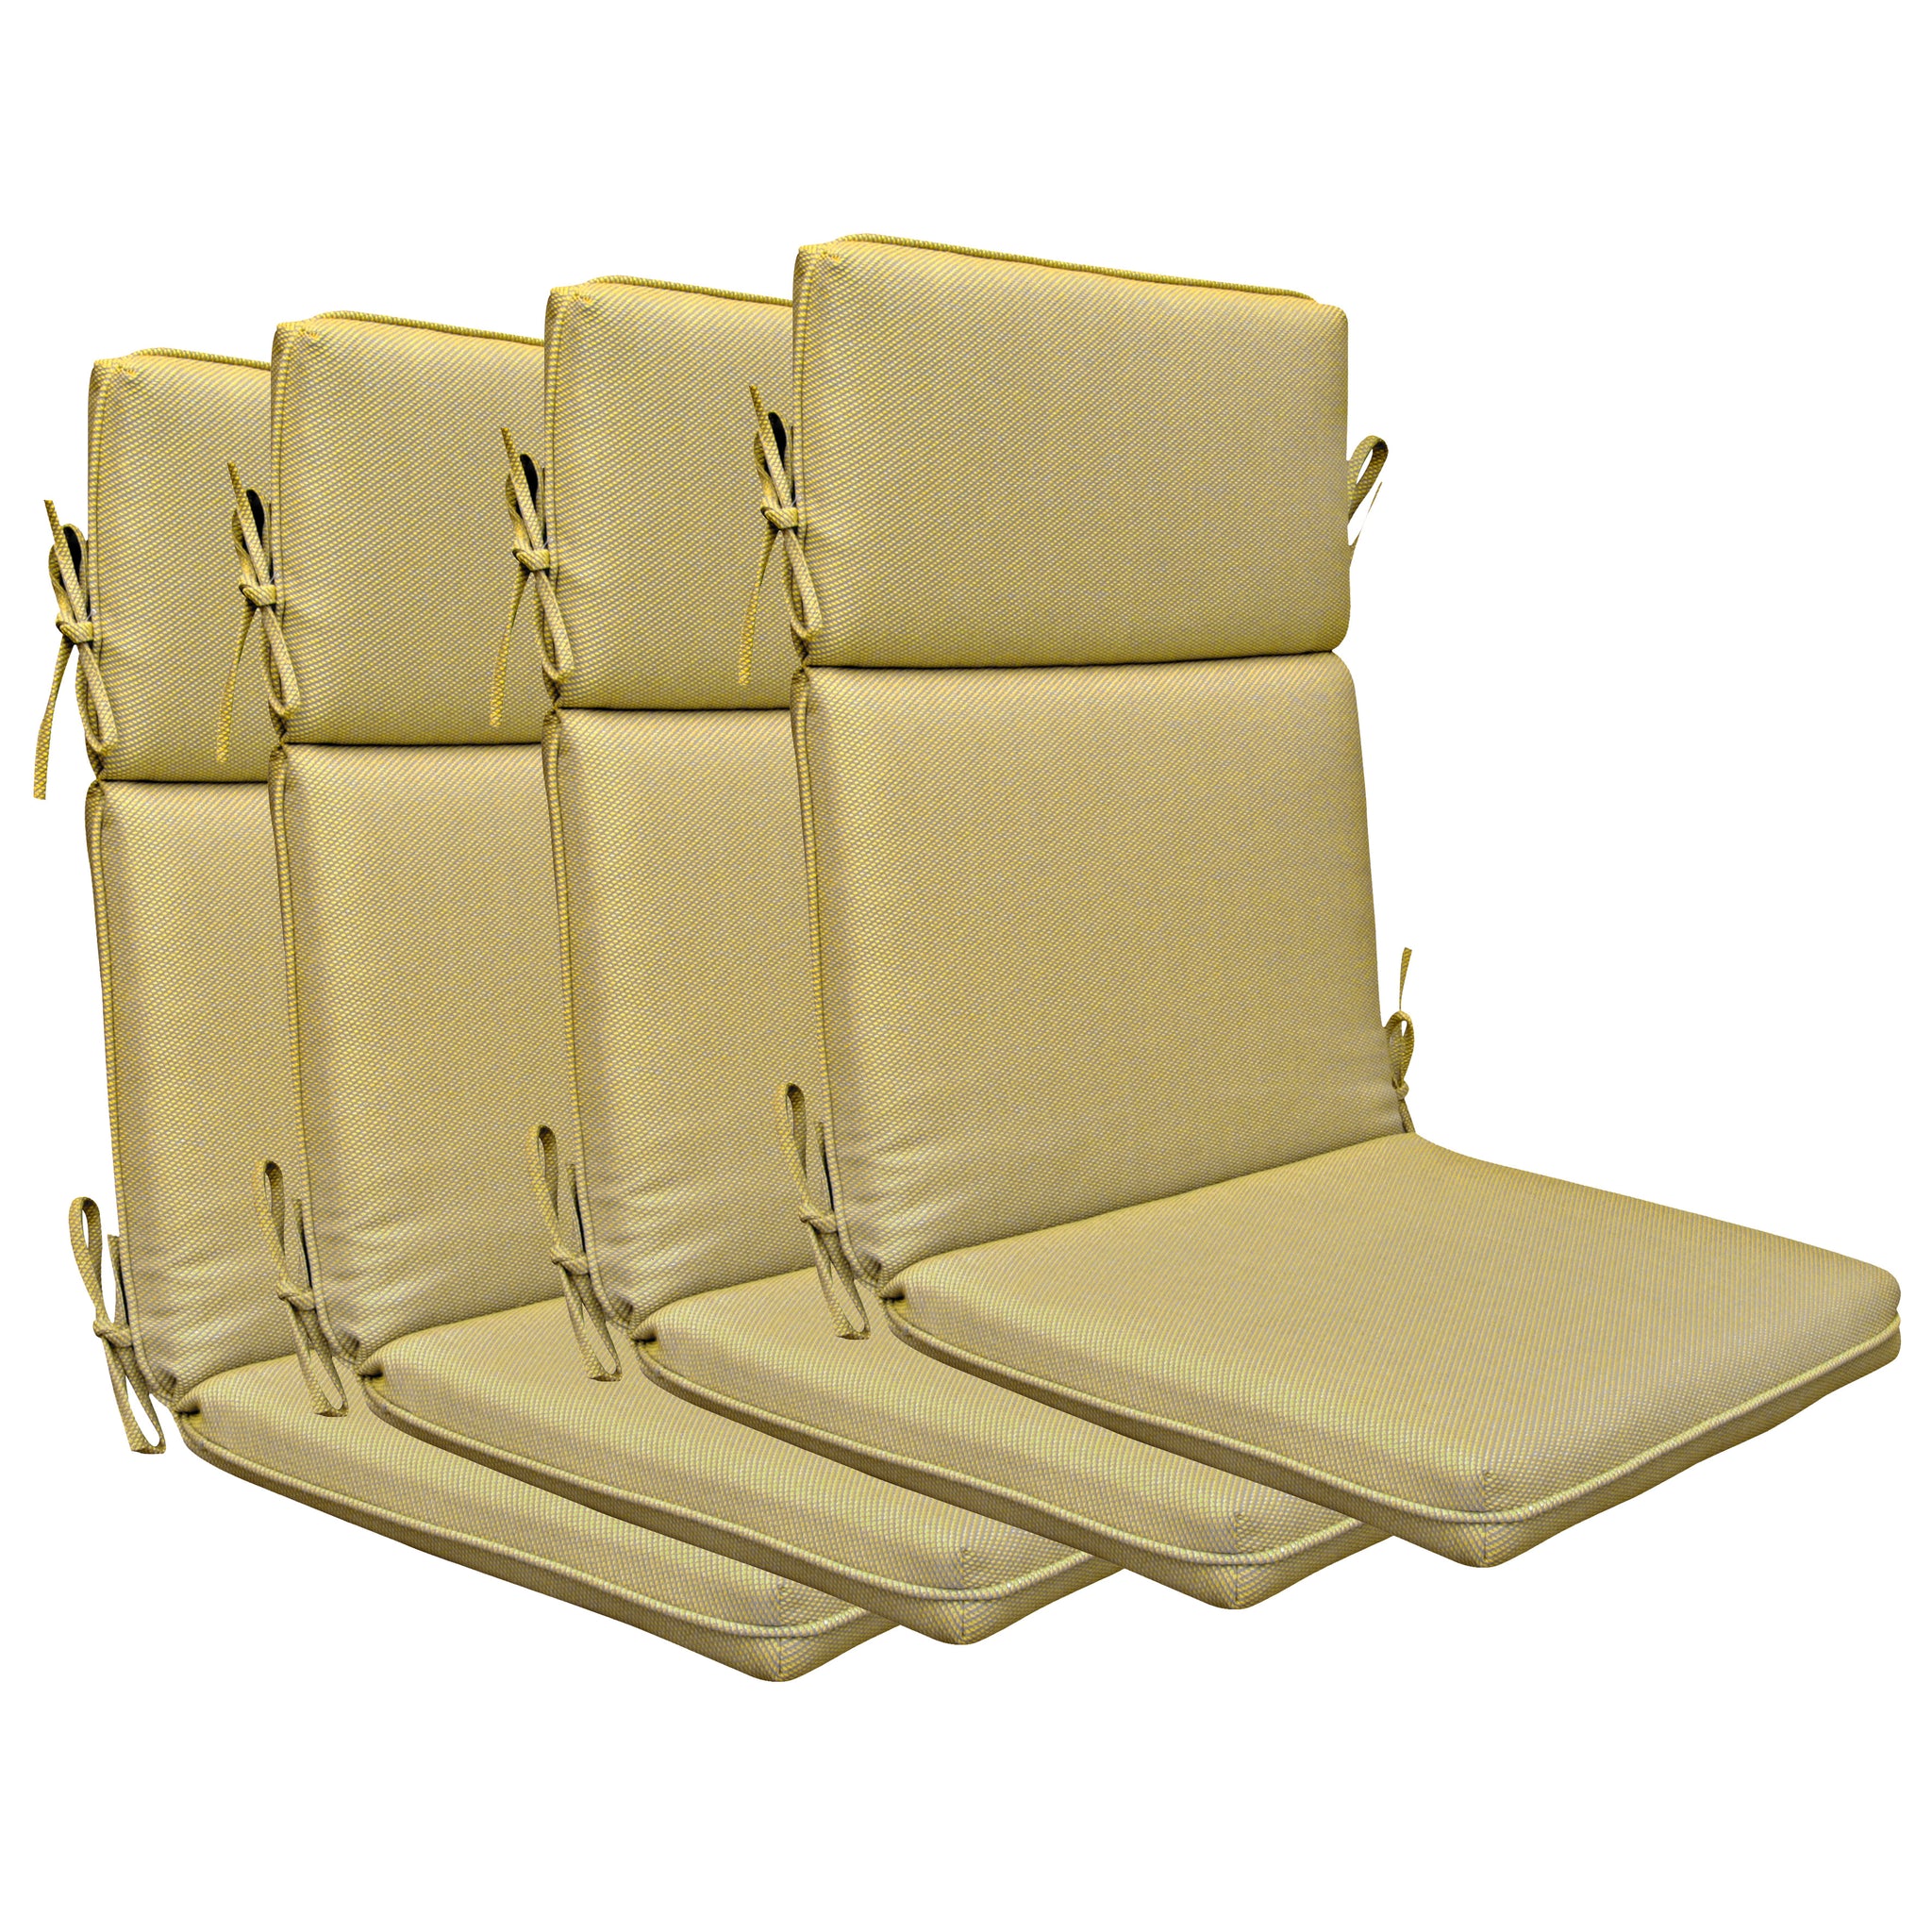 Indoor Outdoor High Back Chair Cushions Set of 4 Olefin Mixed Yellow/Grey